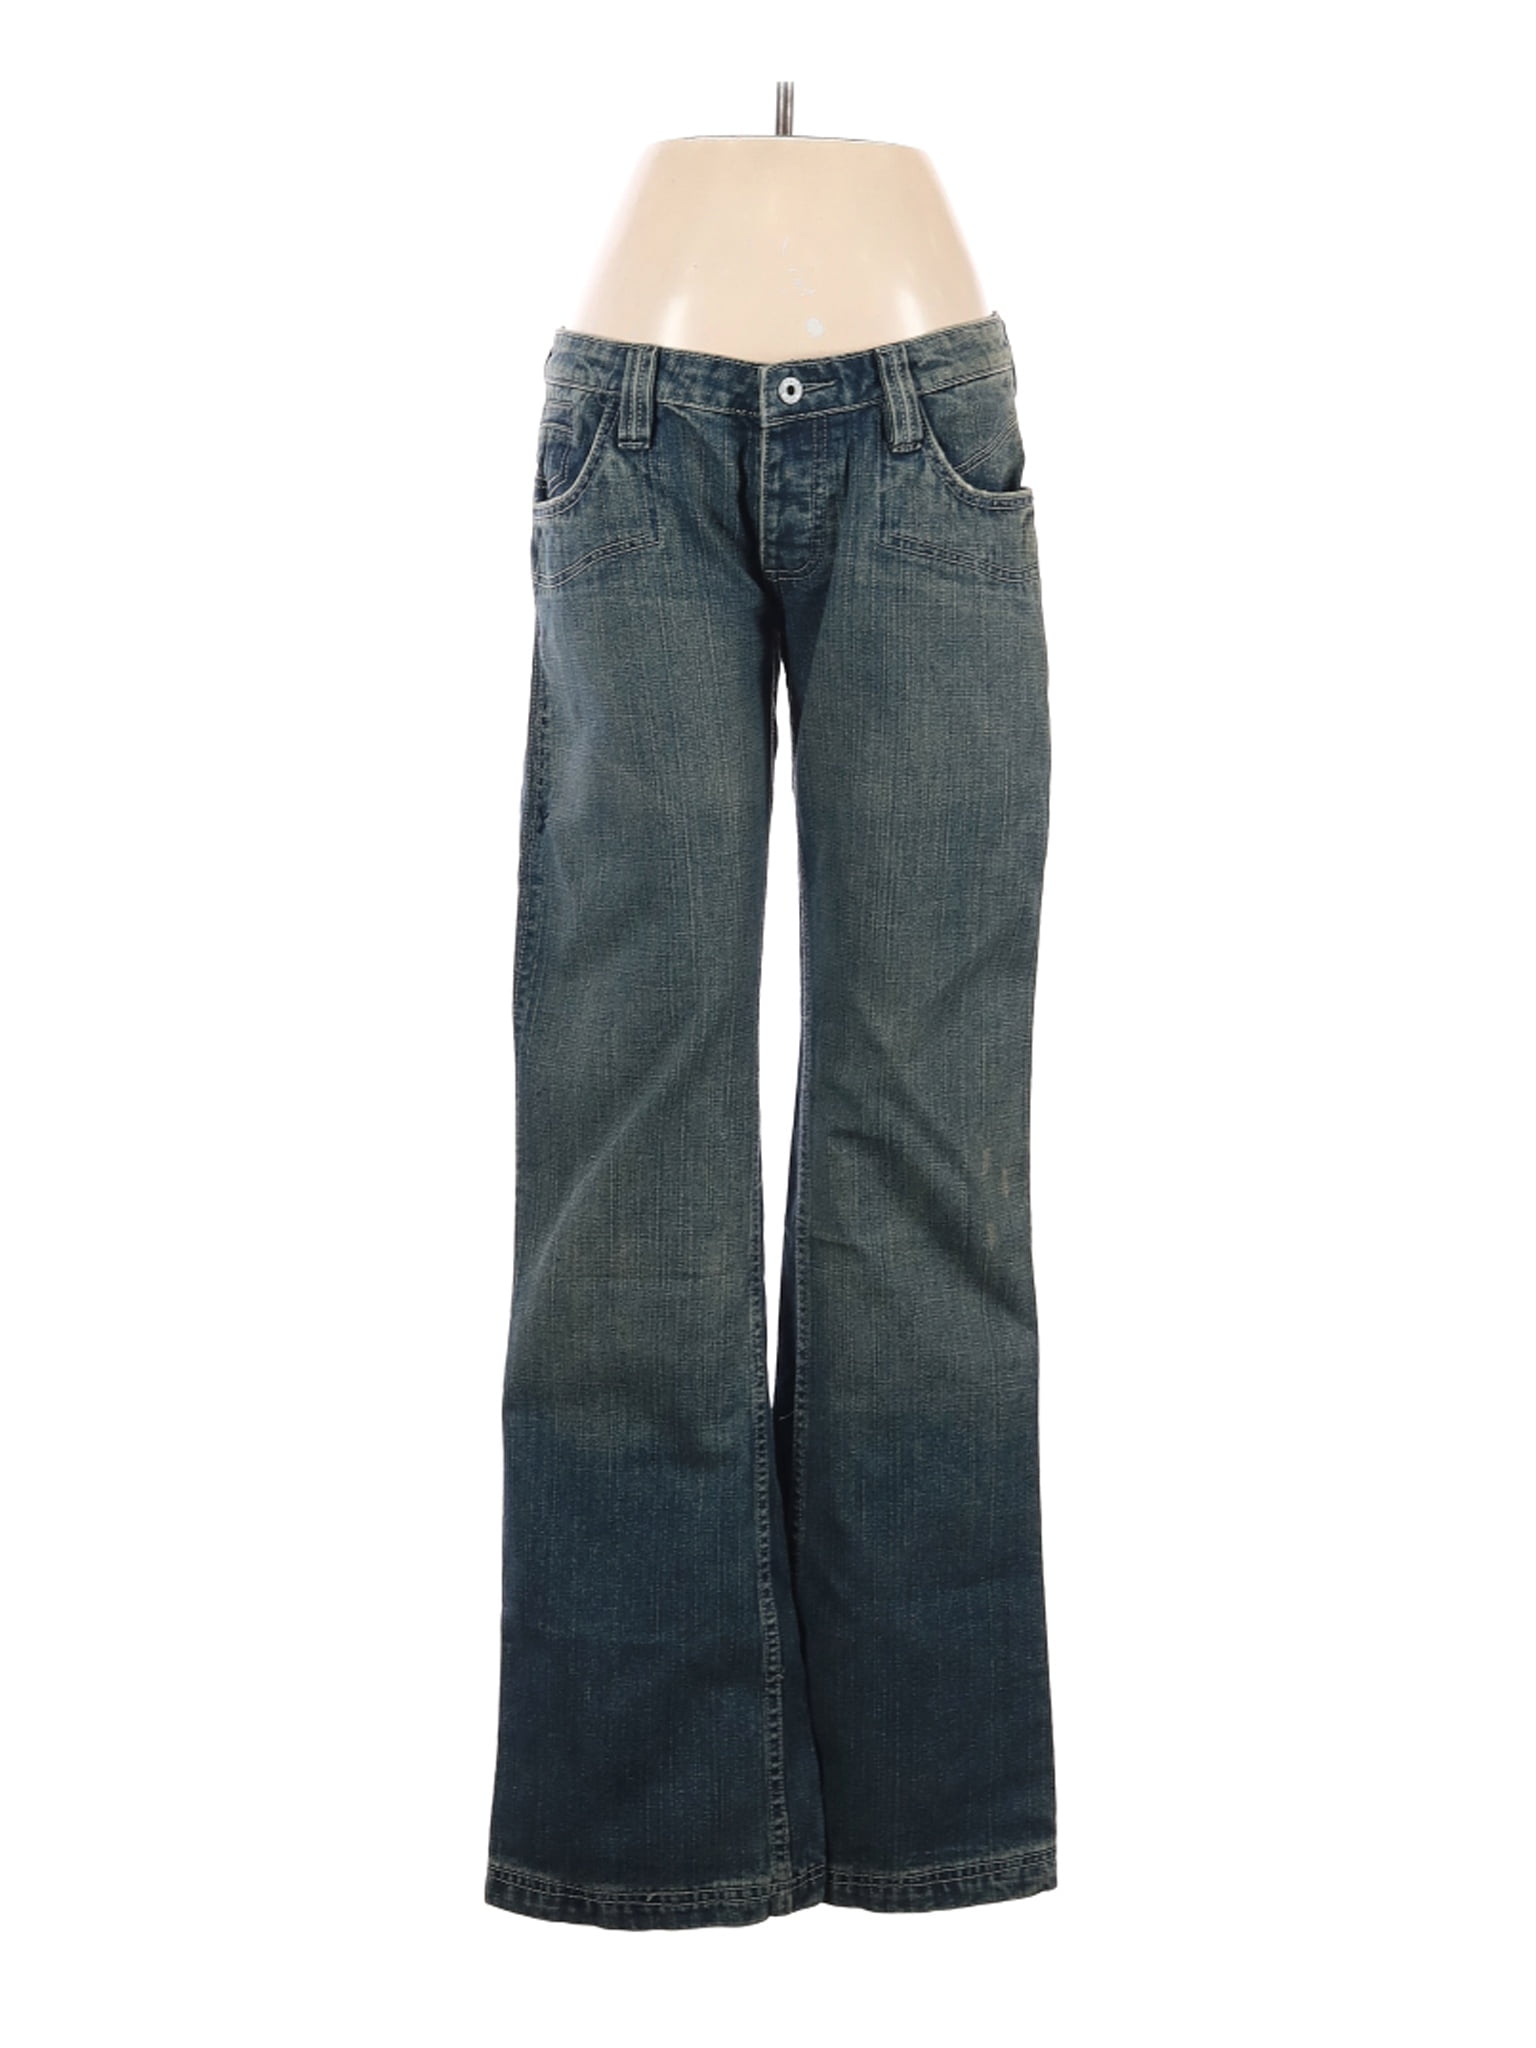 Plante shilling tempo Antik Denim - Pre-Owned Antik Denim Women's Size 31W Jeans - Walmart.com -  Walmart.com